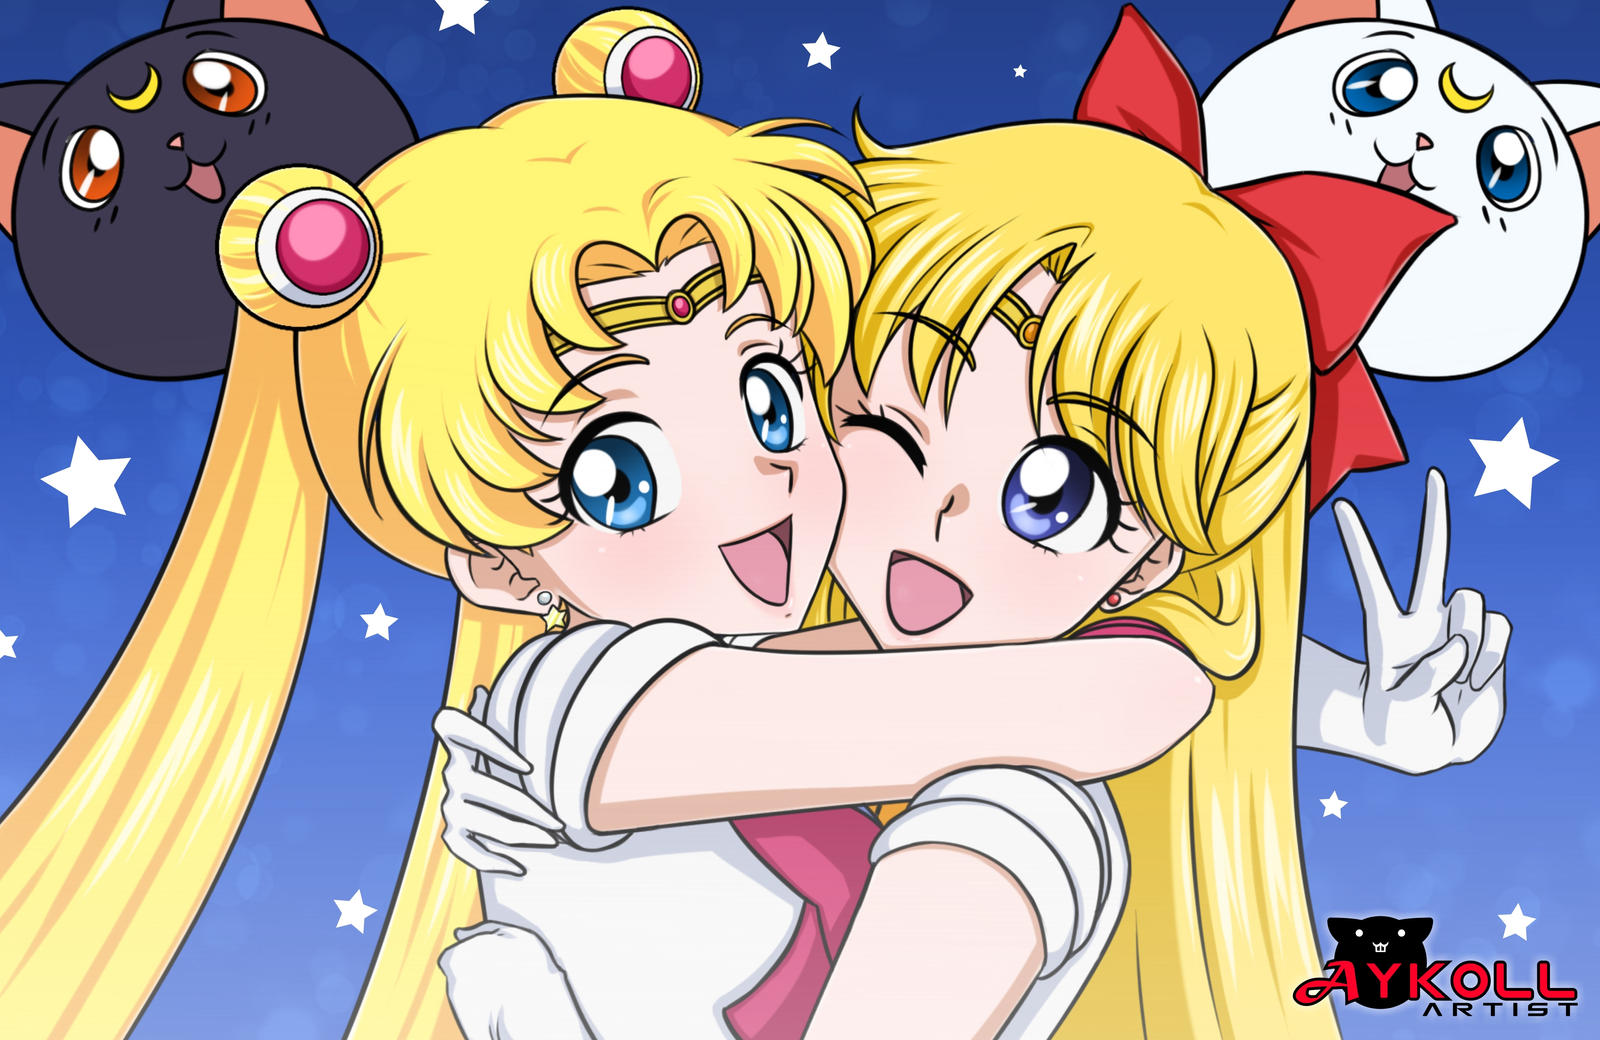 10. "Sailor Venus" from Sailor Moon - wide 4